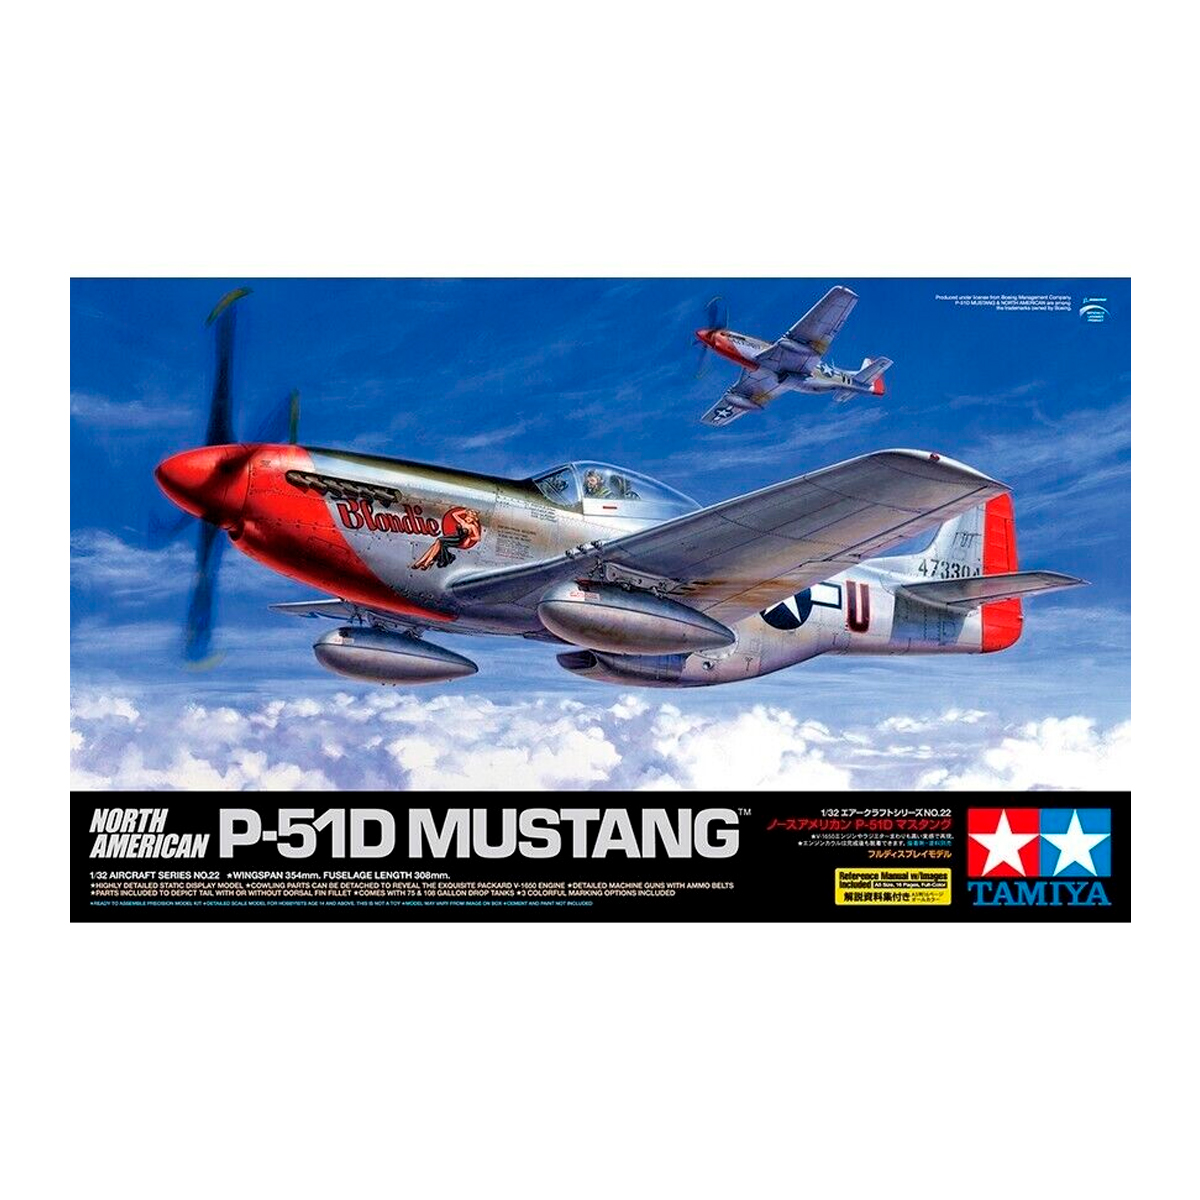 1/32 P-51D Mustang